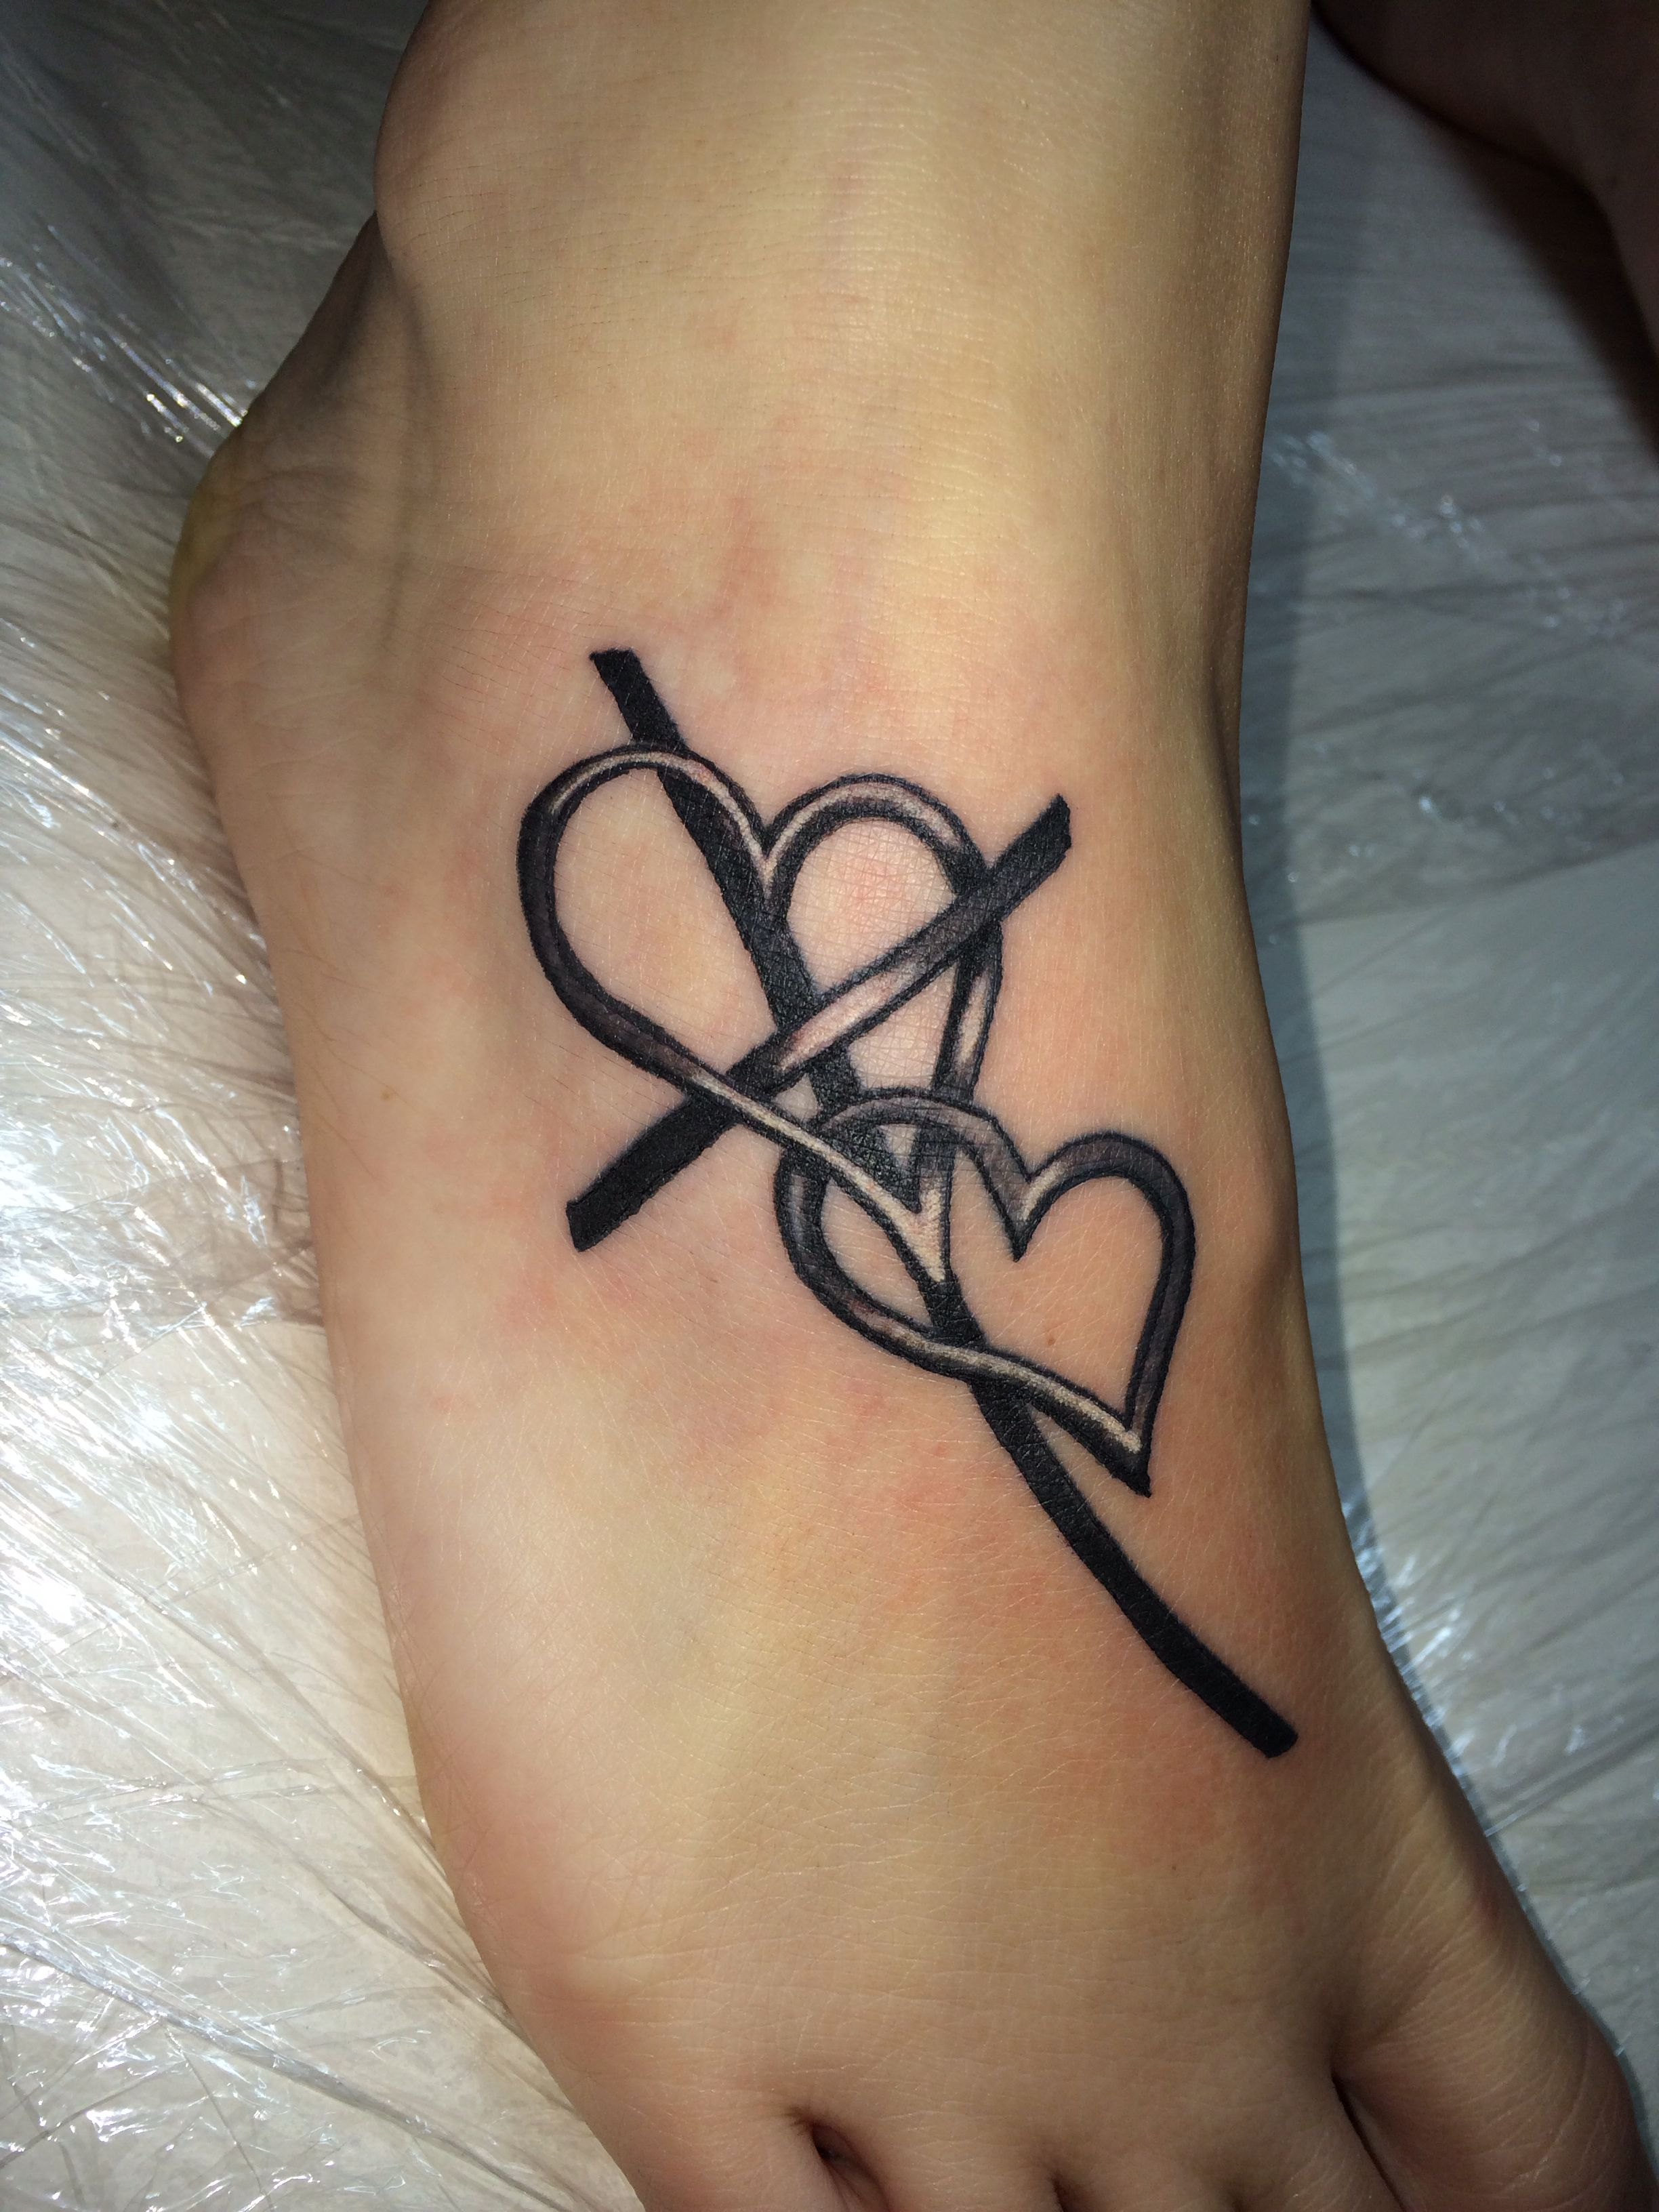 Cross Tattoo Cross With Heart Tattoo Foot Tattoo Tattoos intended for measurements 2448 X 3264